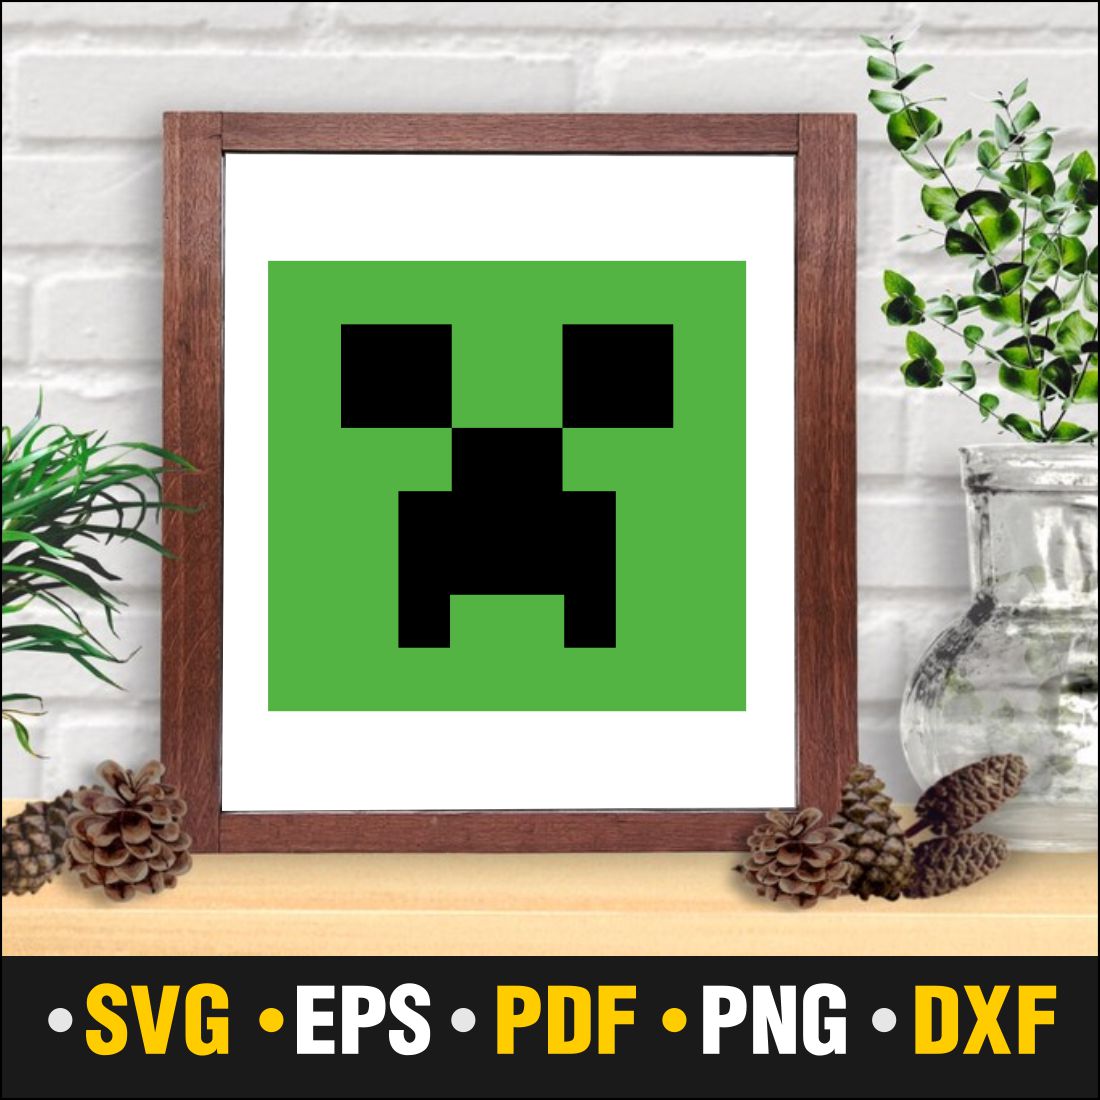 Minecraft Svg, Minecraft Logo Svg Vector Cut file Cricut, Silhouette, Pdf Png, Dxf, Decal, Sticker, Stencil, Vinyl preview image.